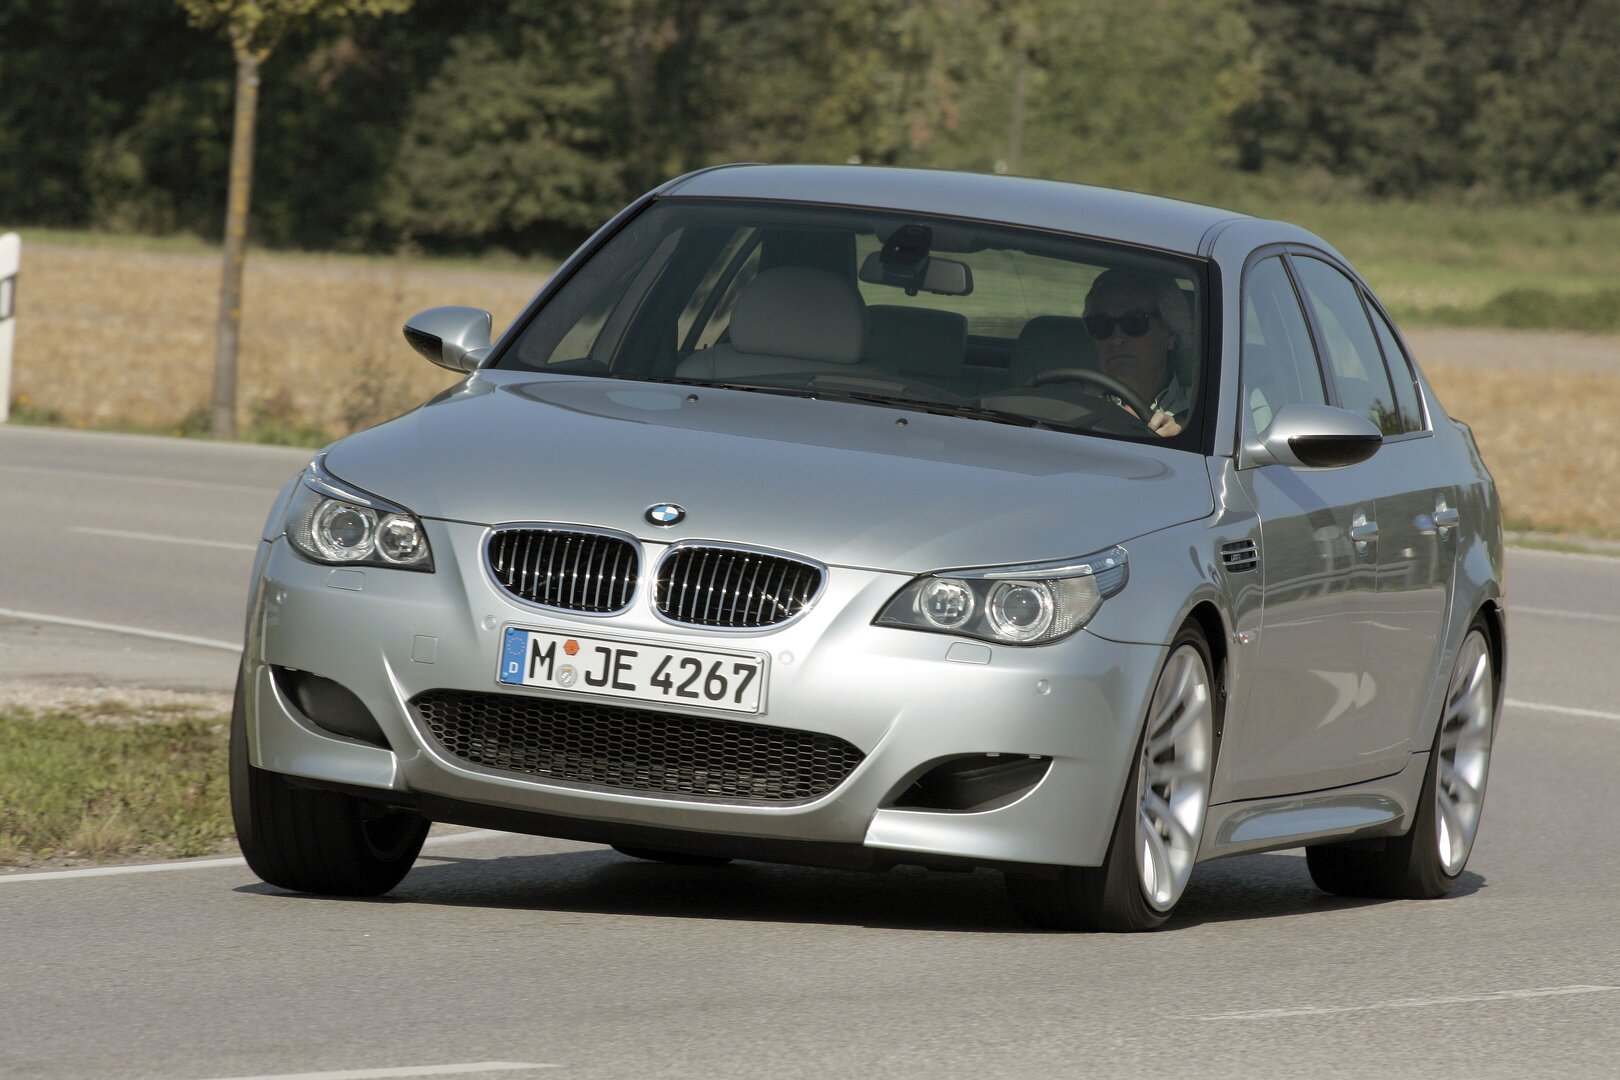 Coche del día: BMW M5 (E60)